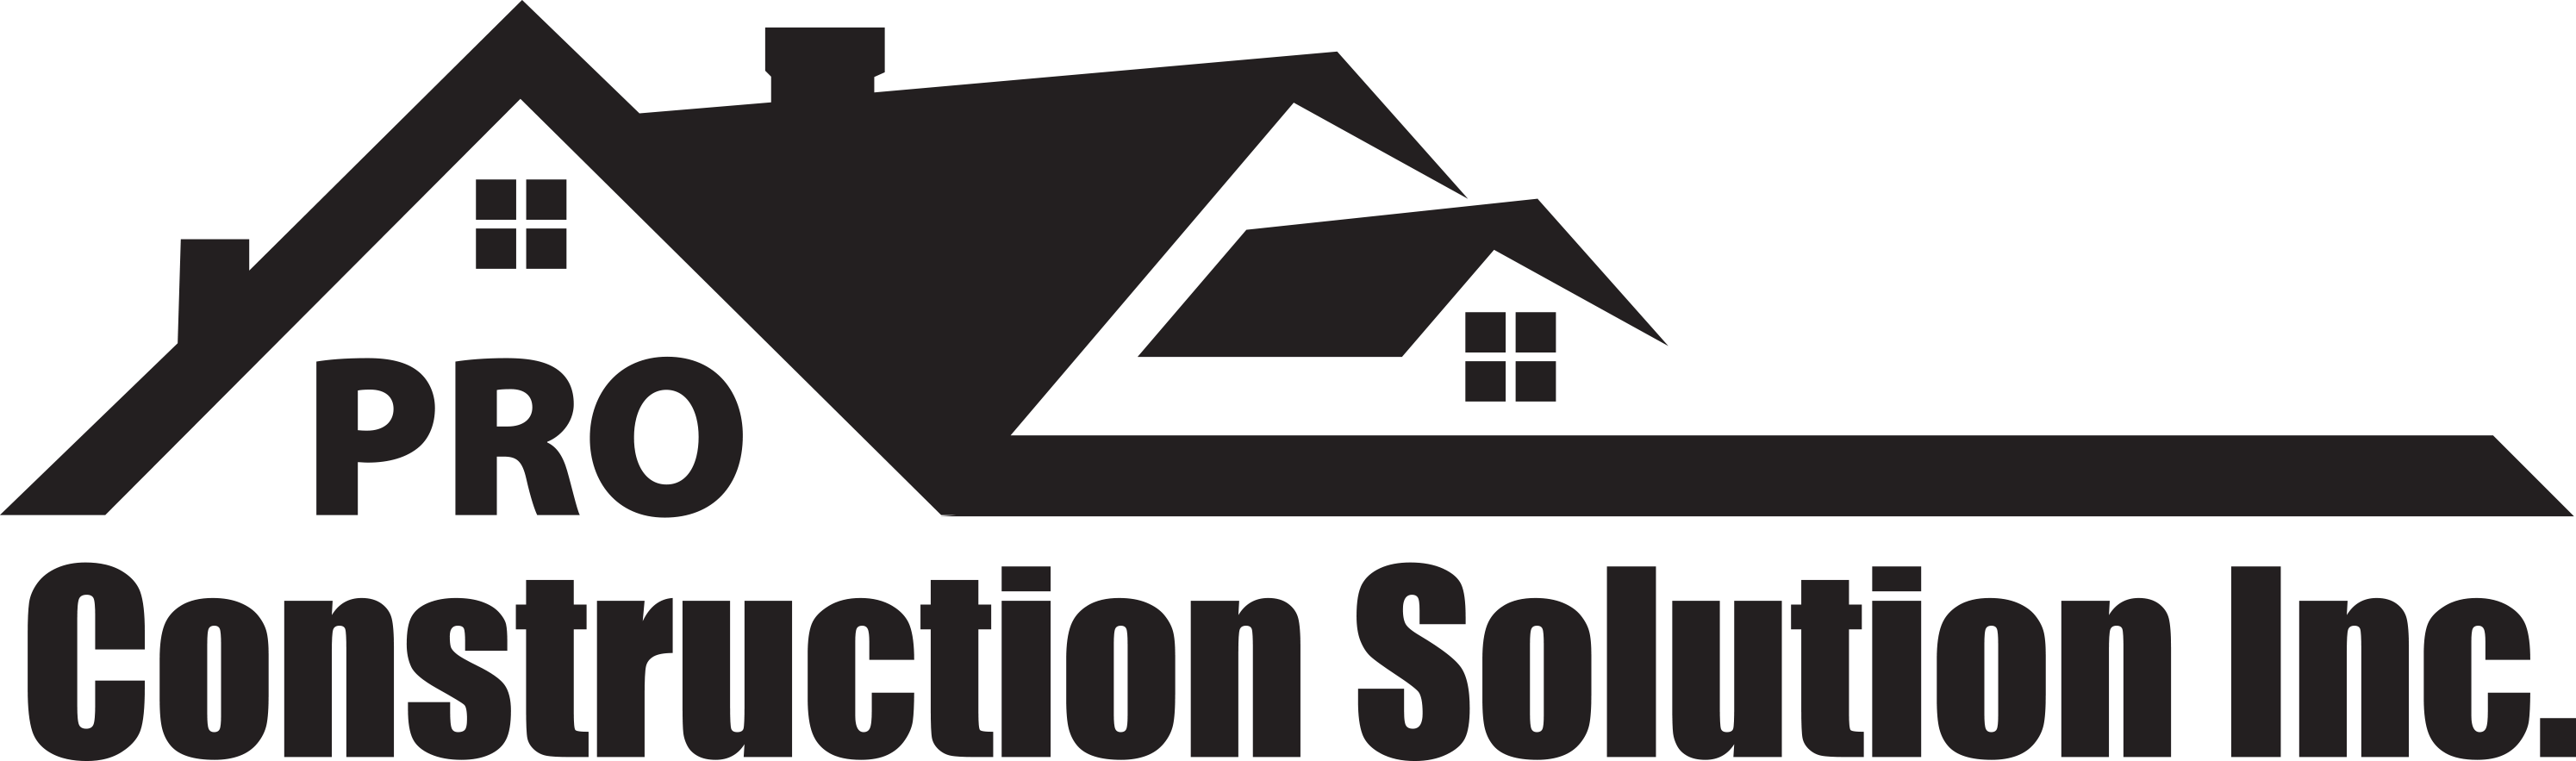 Home Construction Company Logo - PCS. Professional Construction Solution